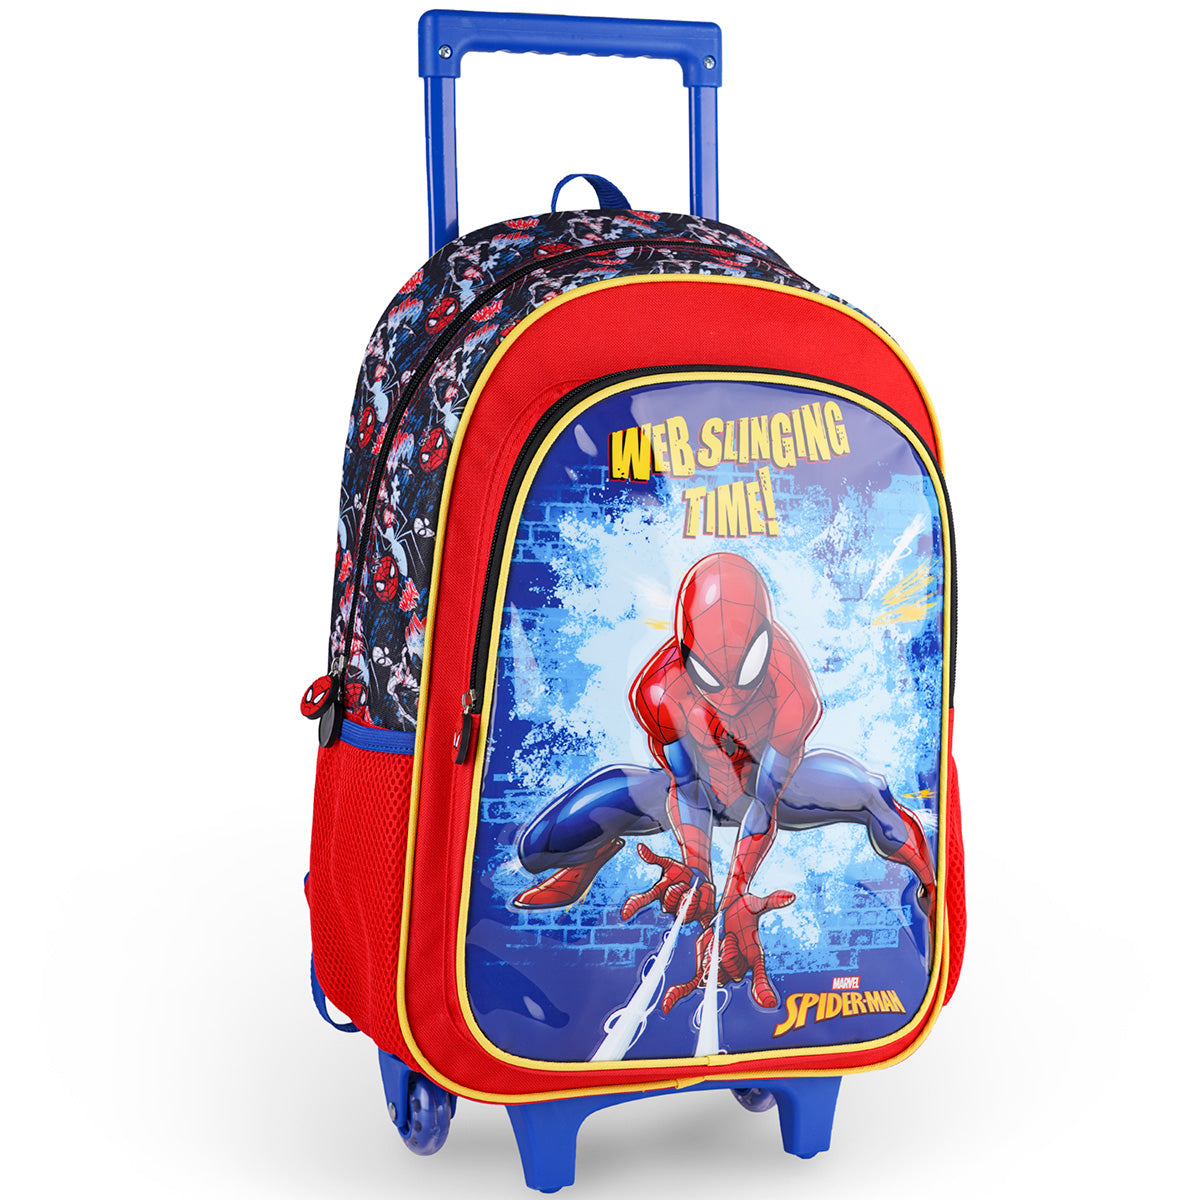 Marvel Spiderman Web Sling Action 6in1 Box Set 18"